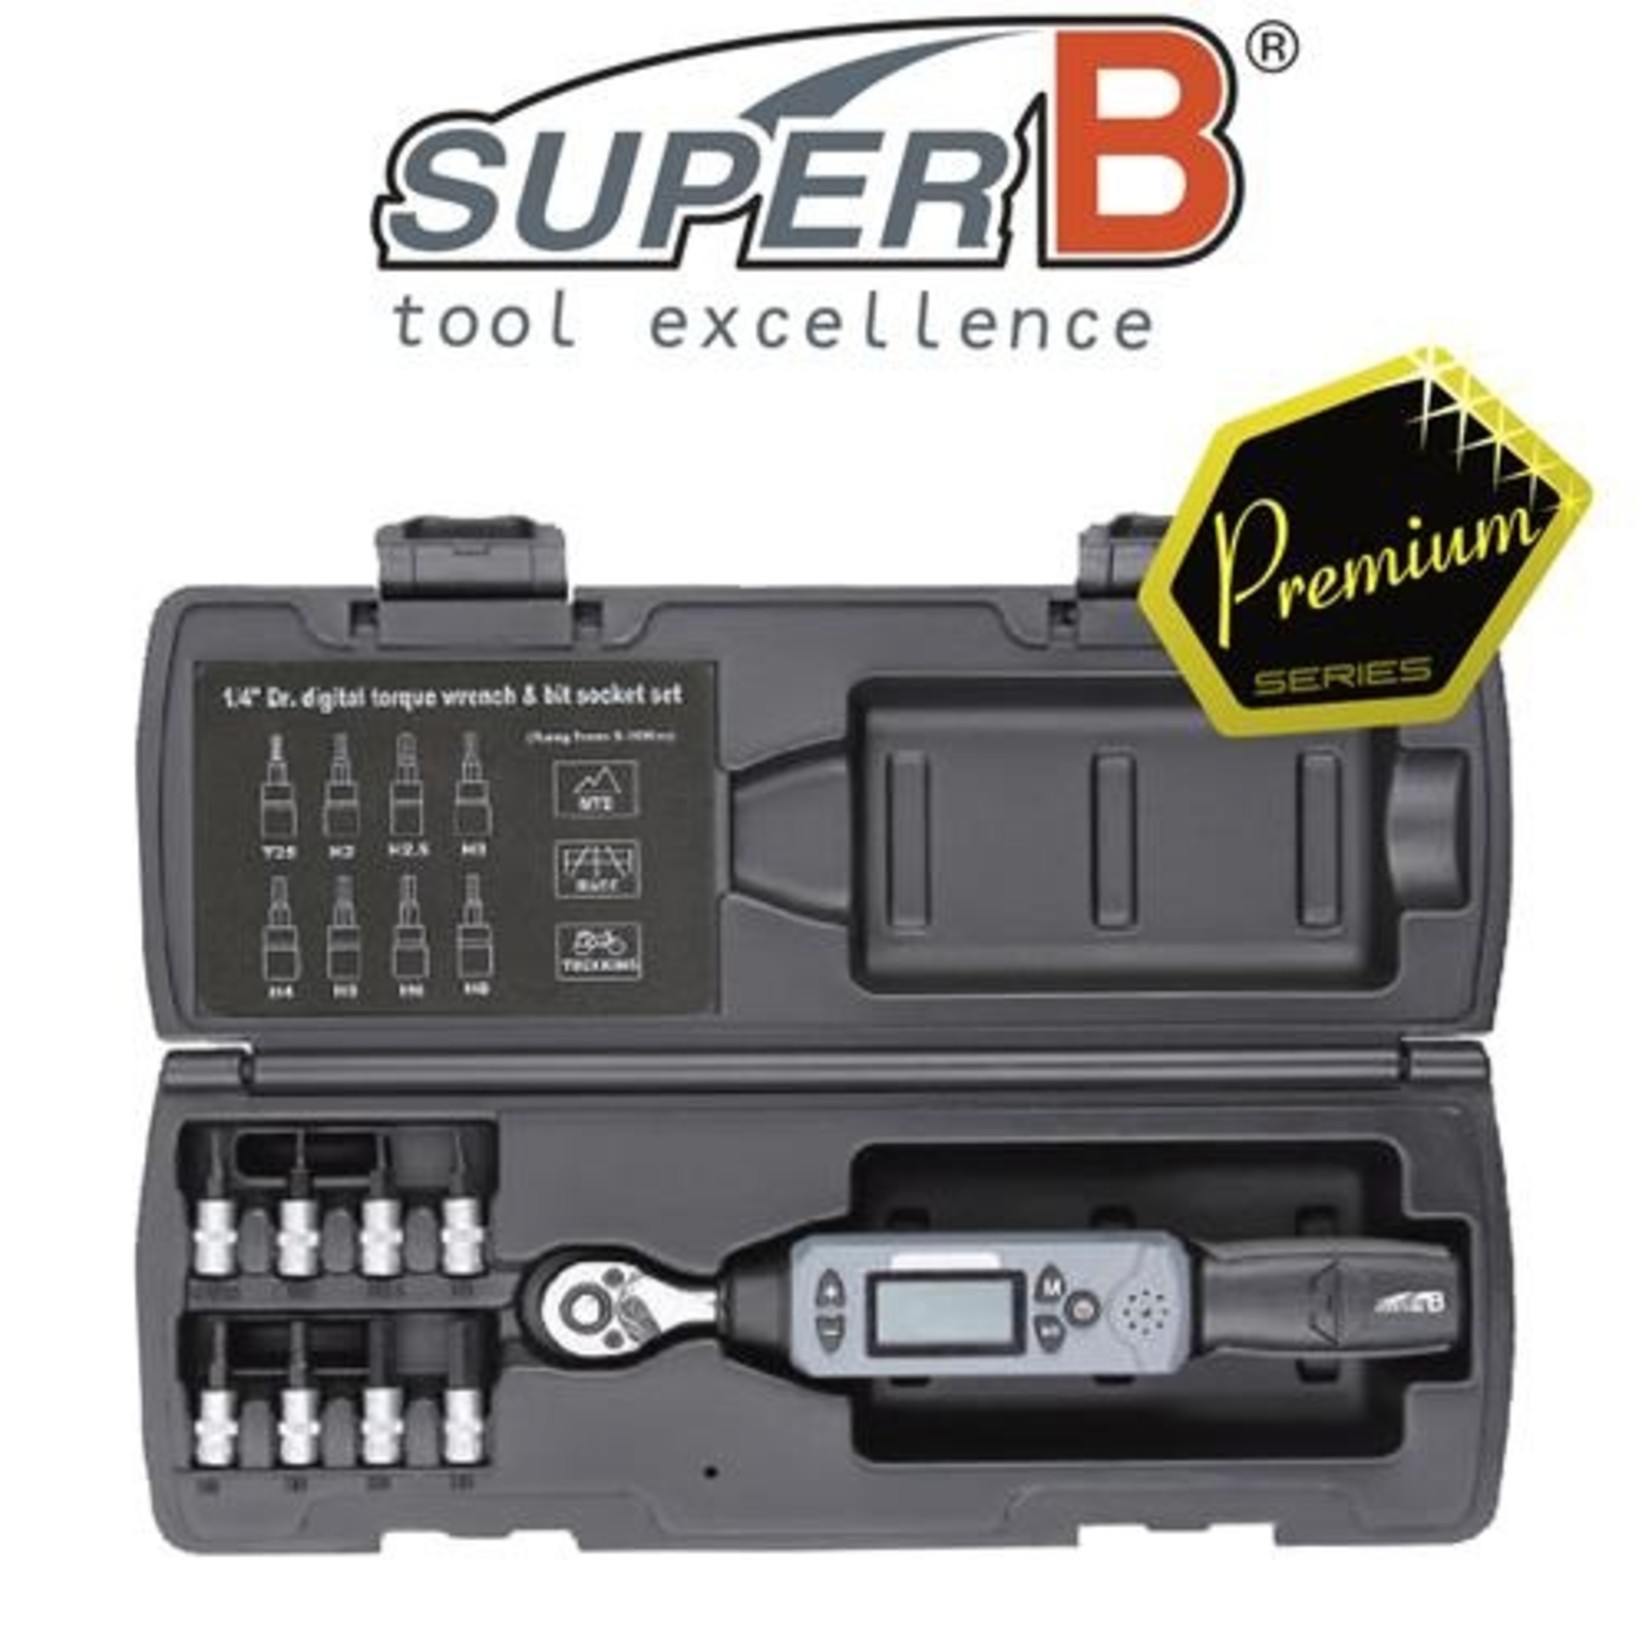 Super B SuperB Digital Premium Series - 1/4 Drive Torque Wrench - 3~30Nm - Bike Tool